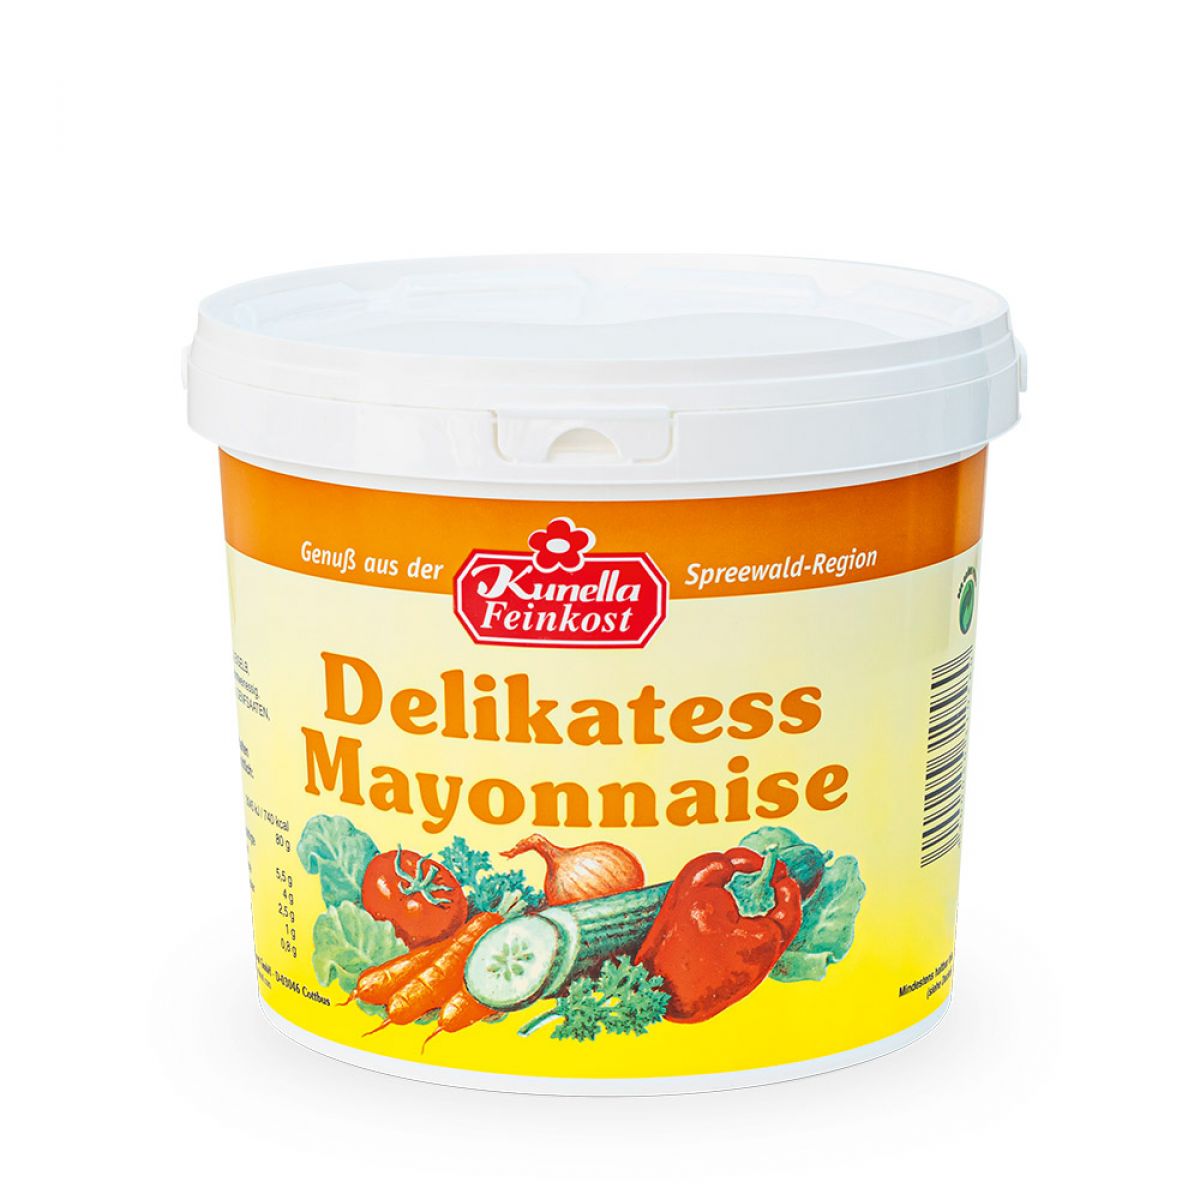 Delicatess Mayonnaise 10Kg